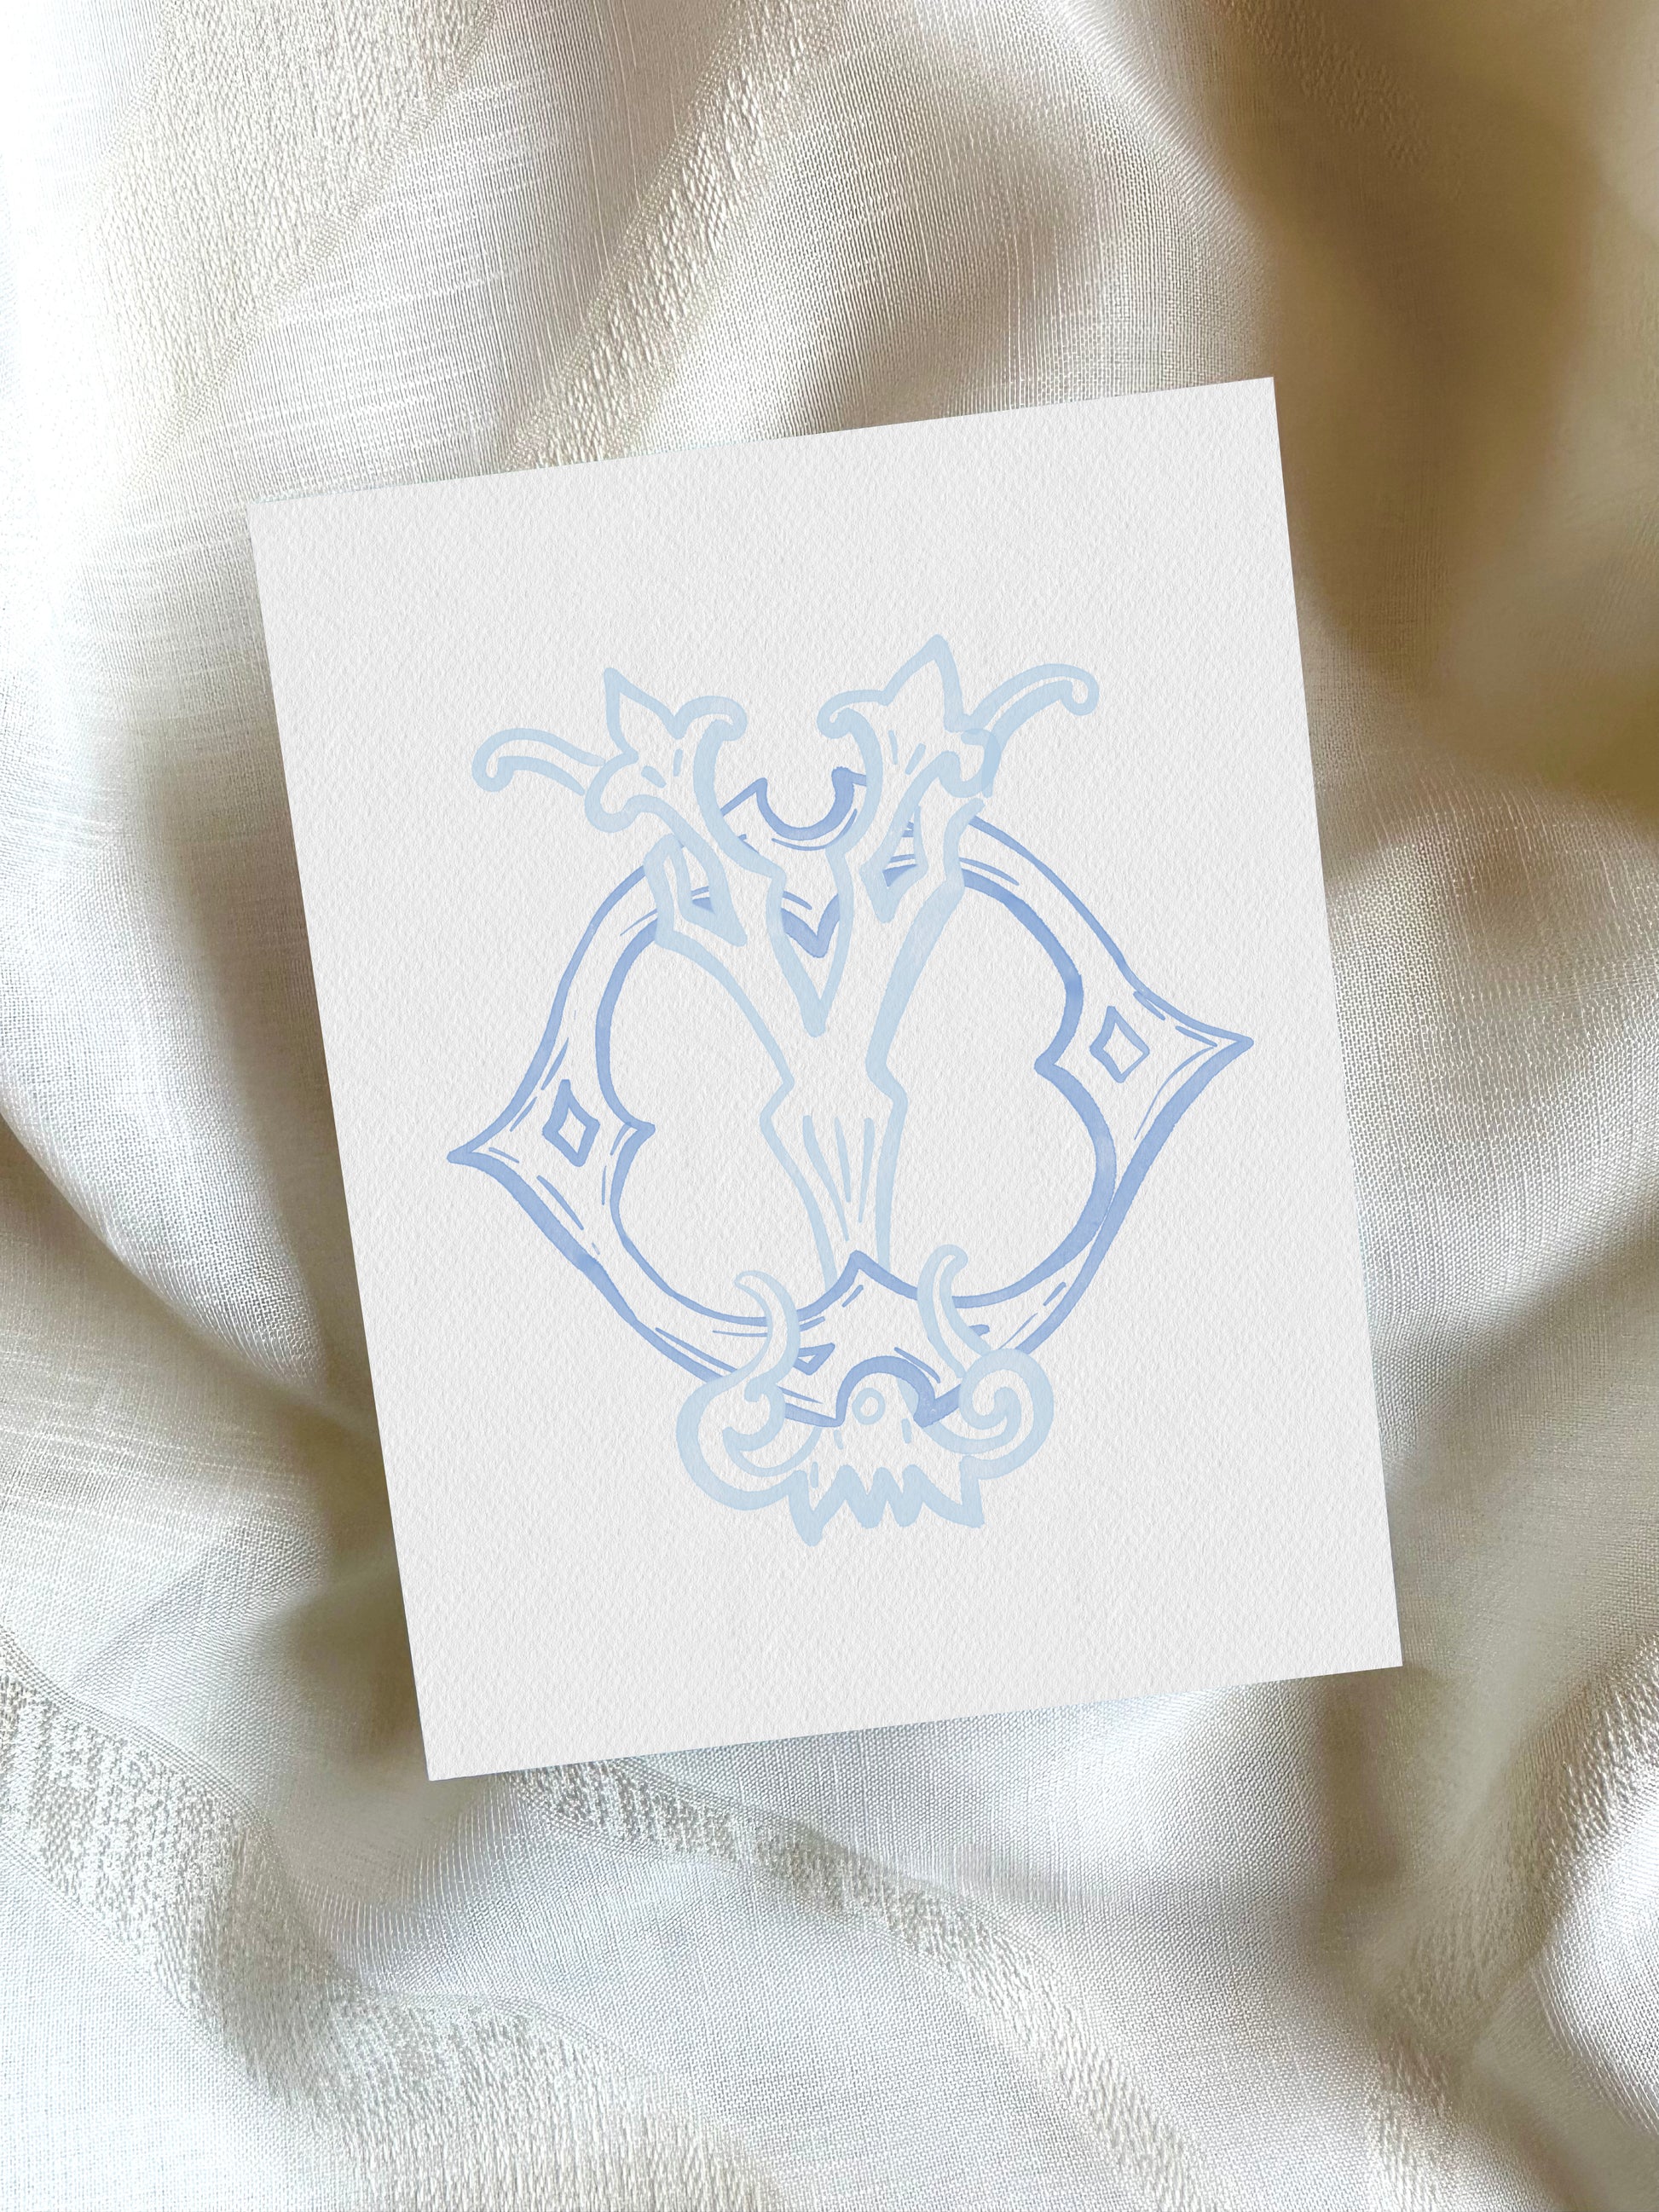 2 Letter Monogram with Letters OY YO | Digital Download - Wedding Monogram SVG, Personal Logo, Wedding Logo for Wedding Invitations The Wedding Crest Lab